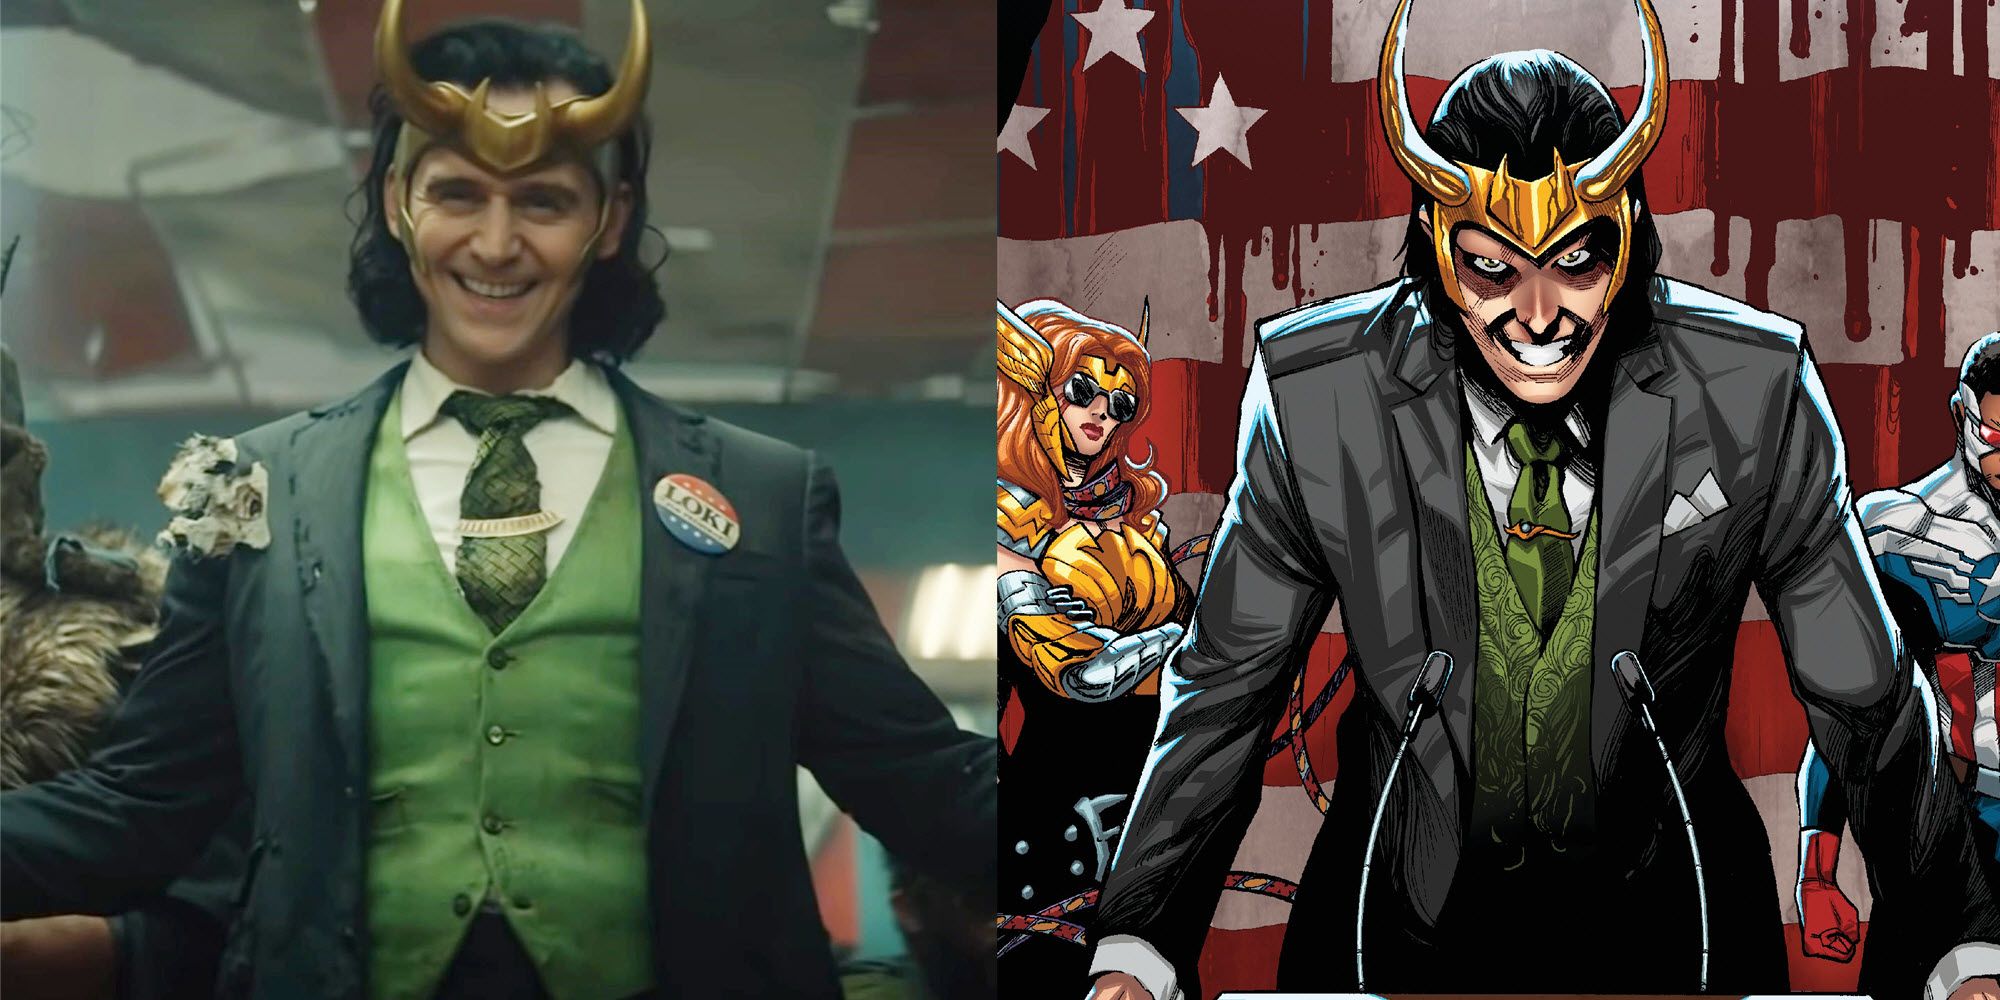 Split image of Tom Hiddlestone in Dinsey+ Loki series and Vote Loki comic wearing similar outfit